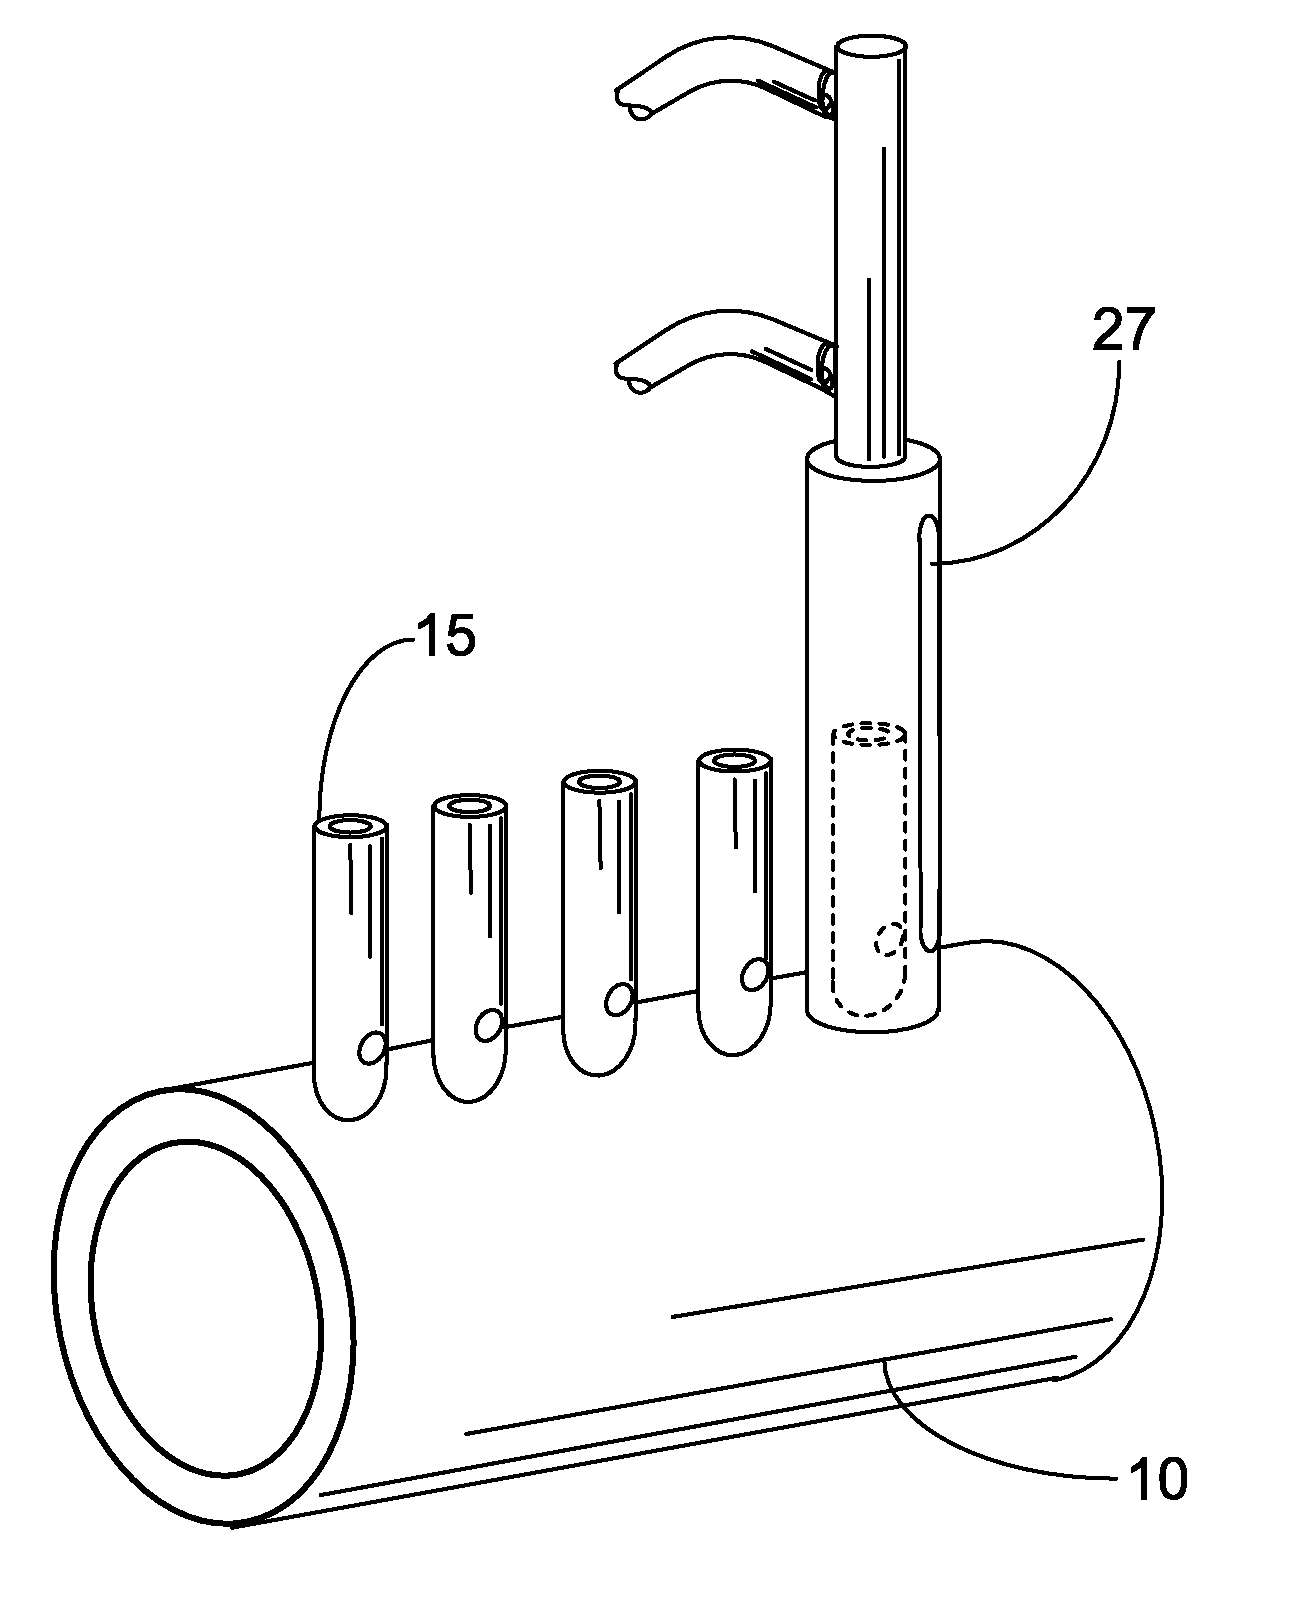 Tube Stub Removal Apparatus and Method